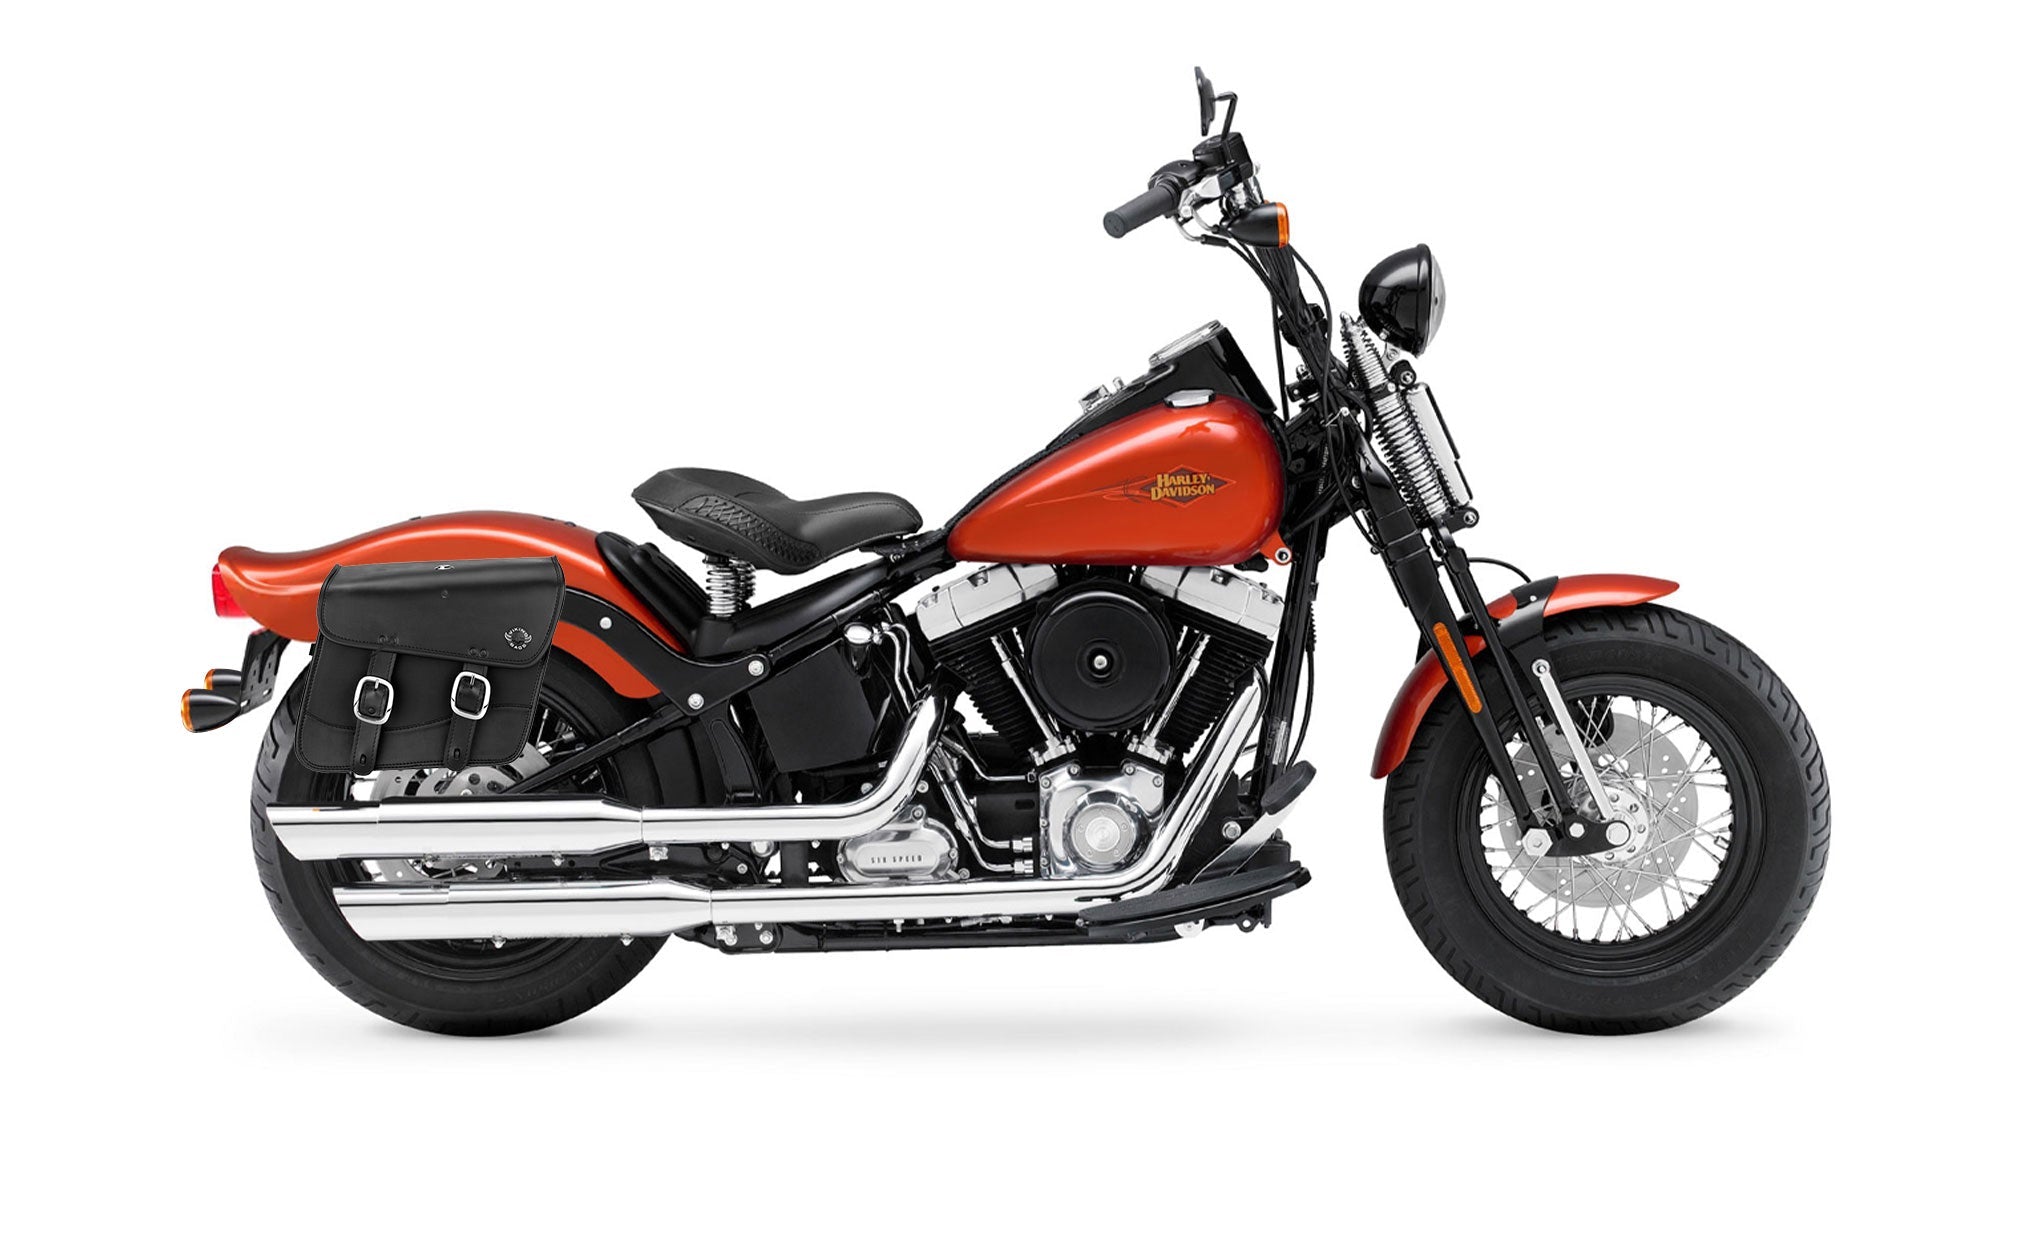 20L - Thor Medium Leather Motorcycle Saddlebags for Harley Softail Cross Bones FLSTSB @expand